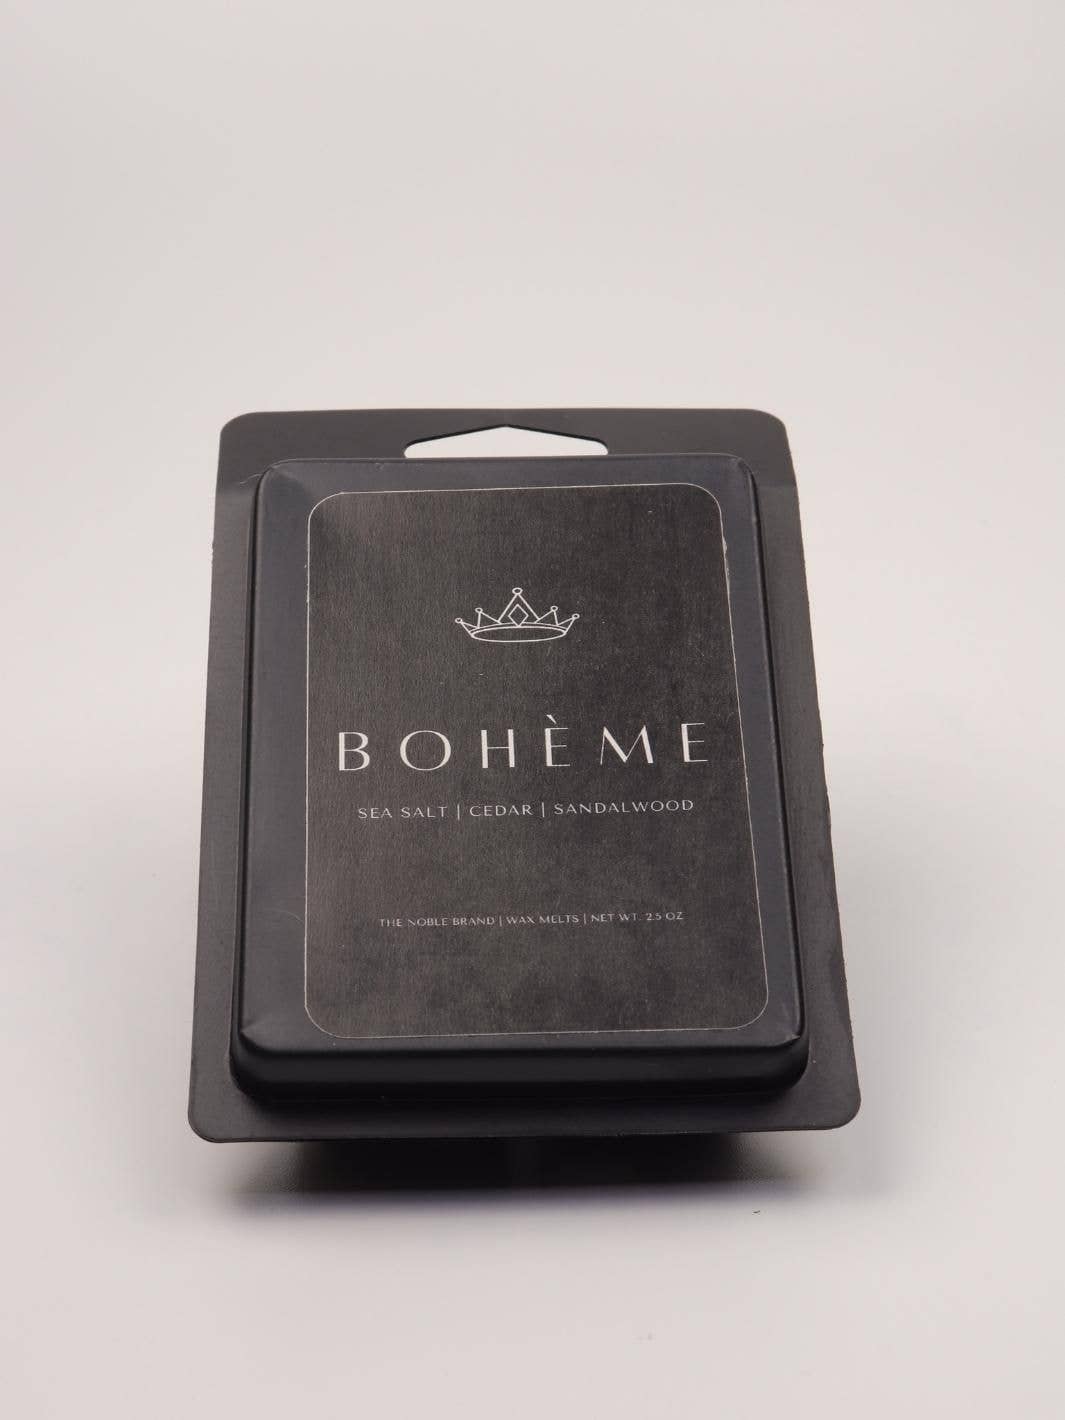 BOHEME - The Noble Brand